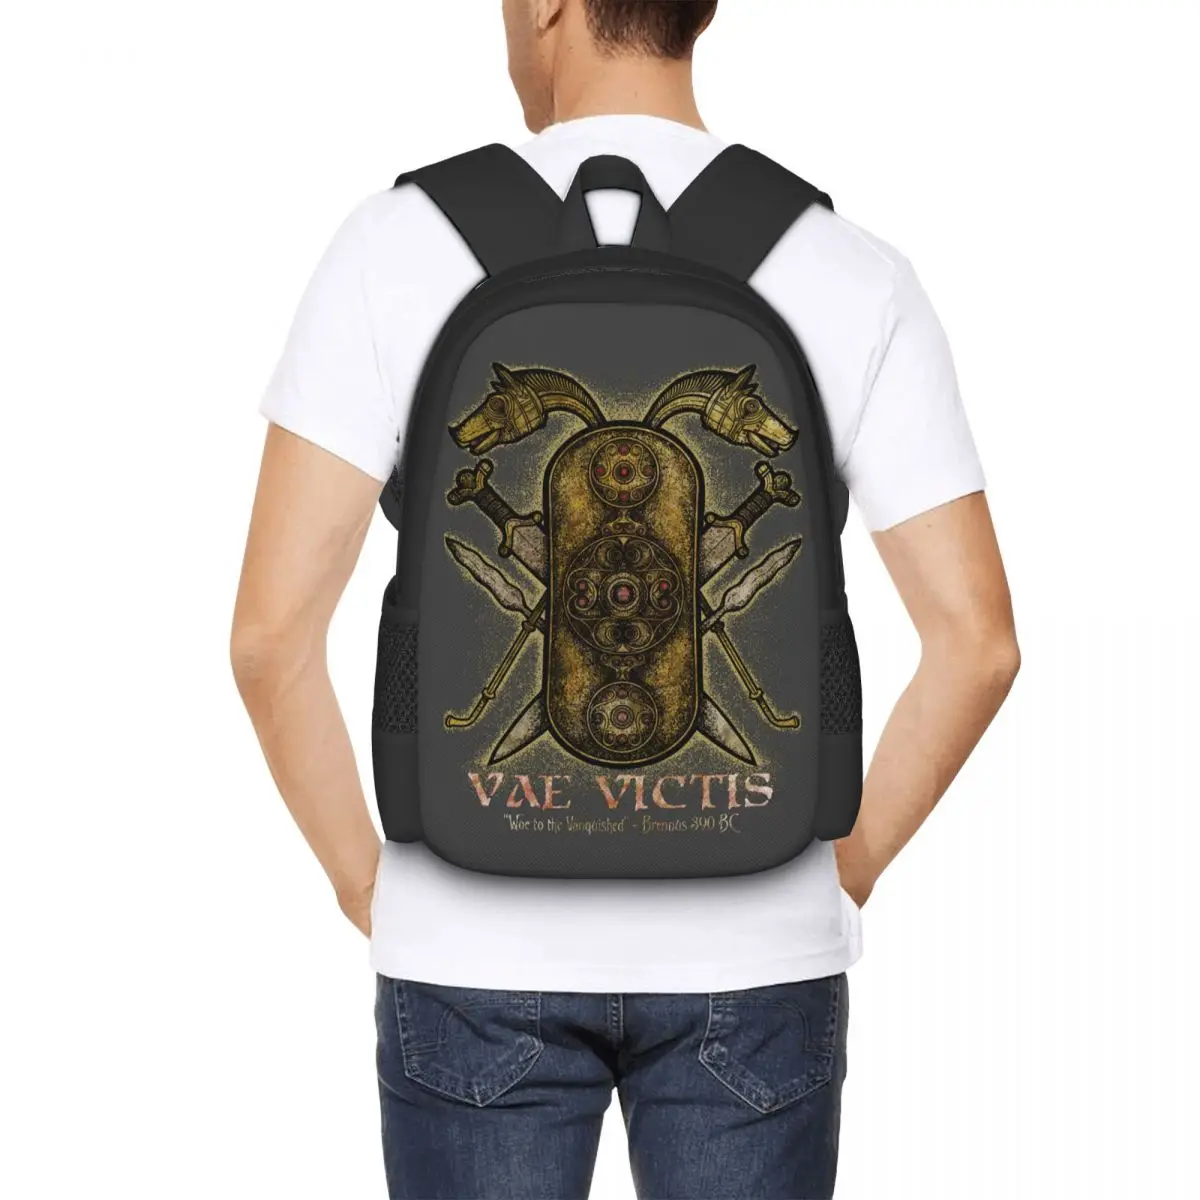 Vae Victis - Woe To The Vanquished,Celtic Backpack for Girls Boys Travel RucksackBackpacks for Teenage school bag